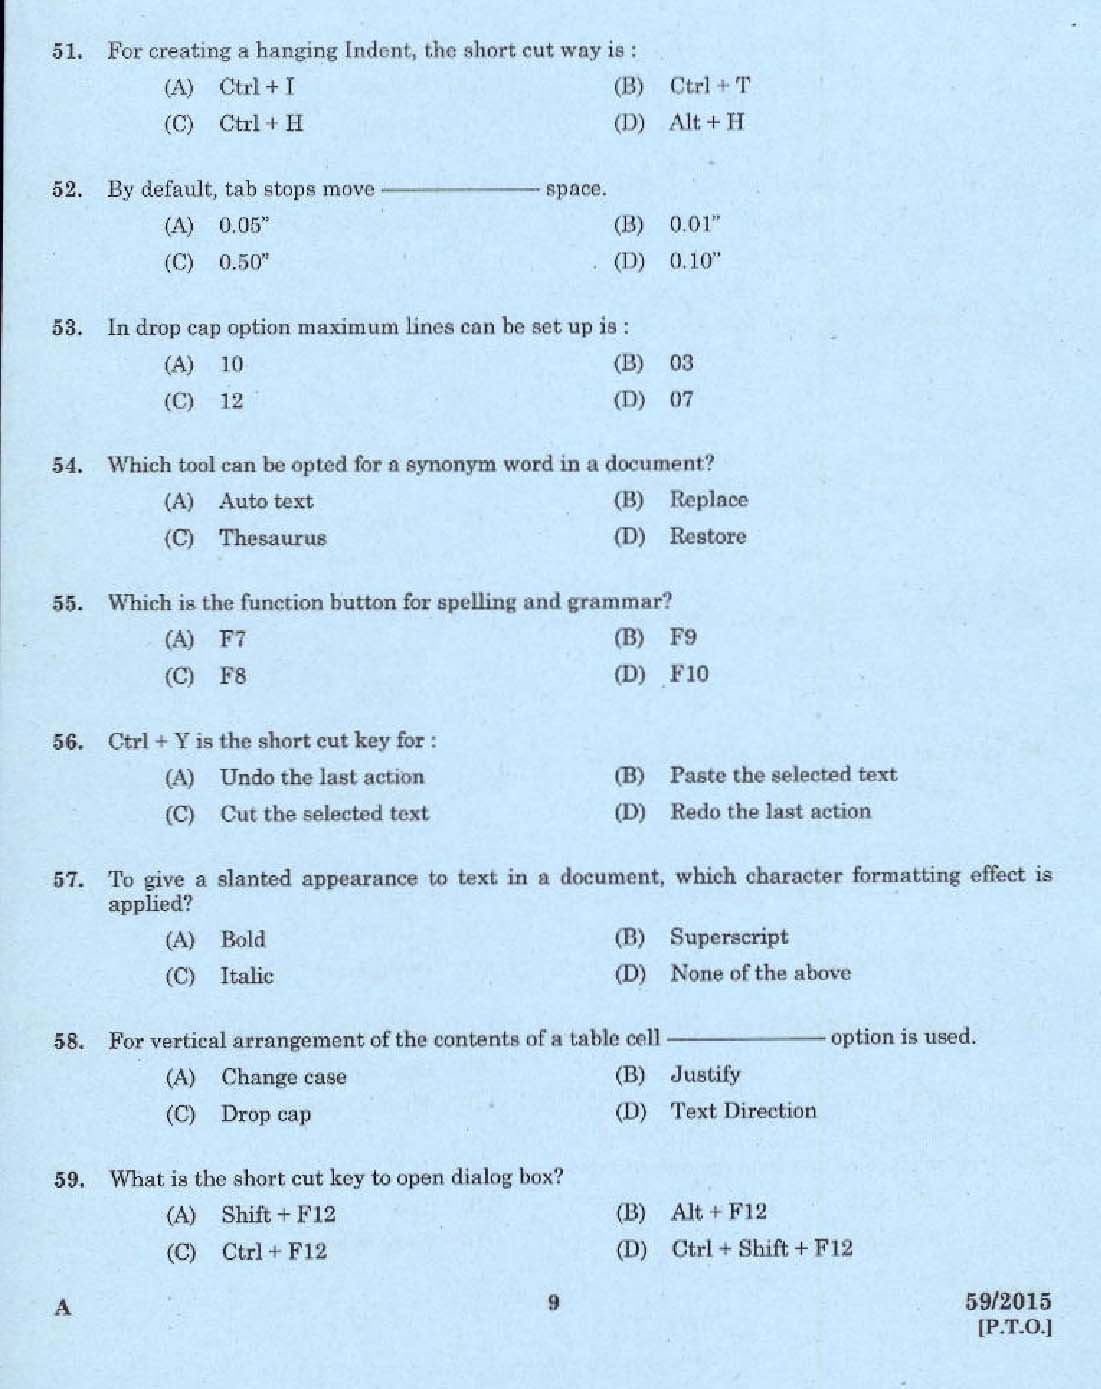 Kerala PSC Malayalam Stenographer Exam 2015 Question Paper Code 592015 7